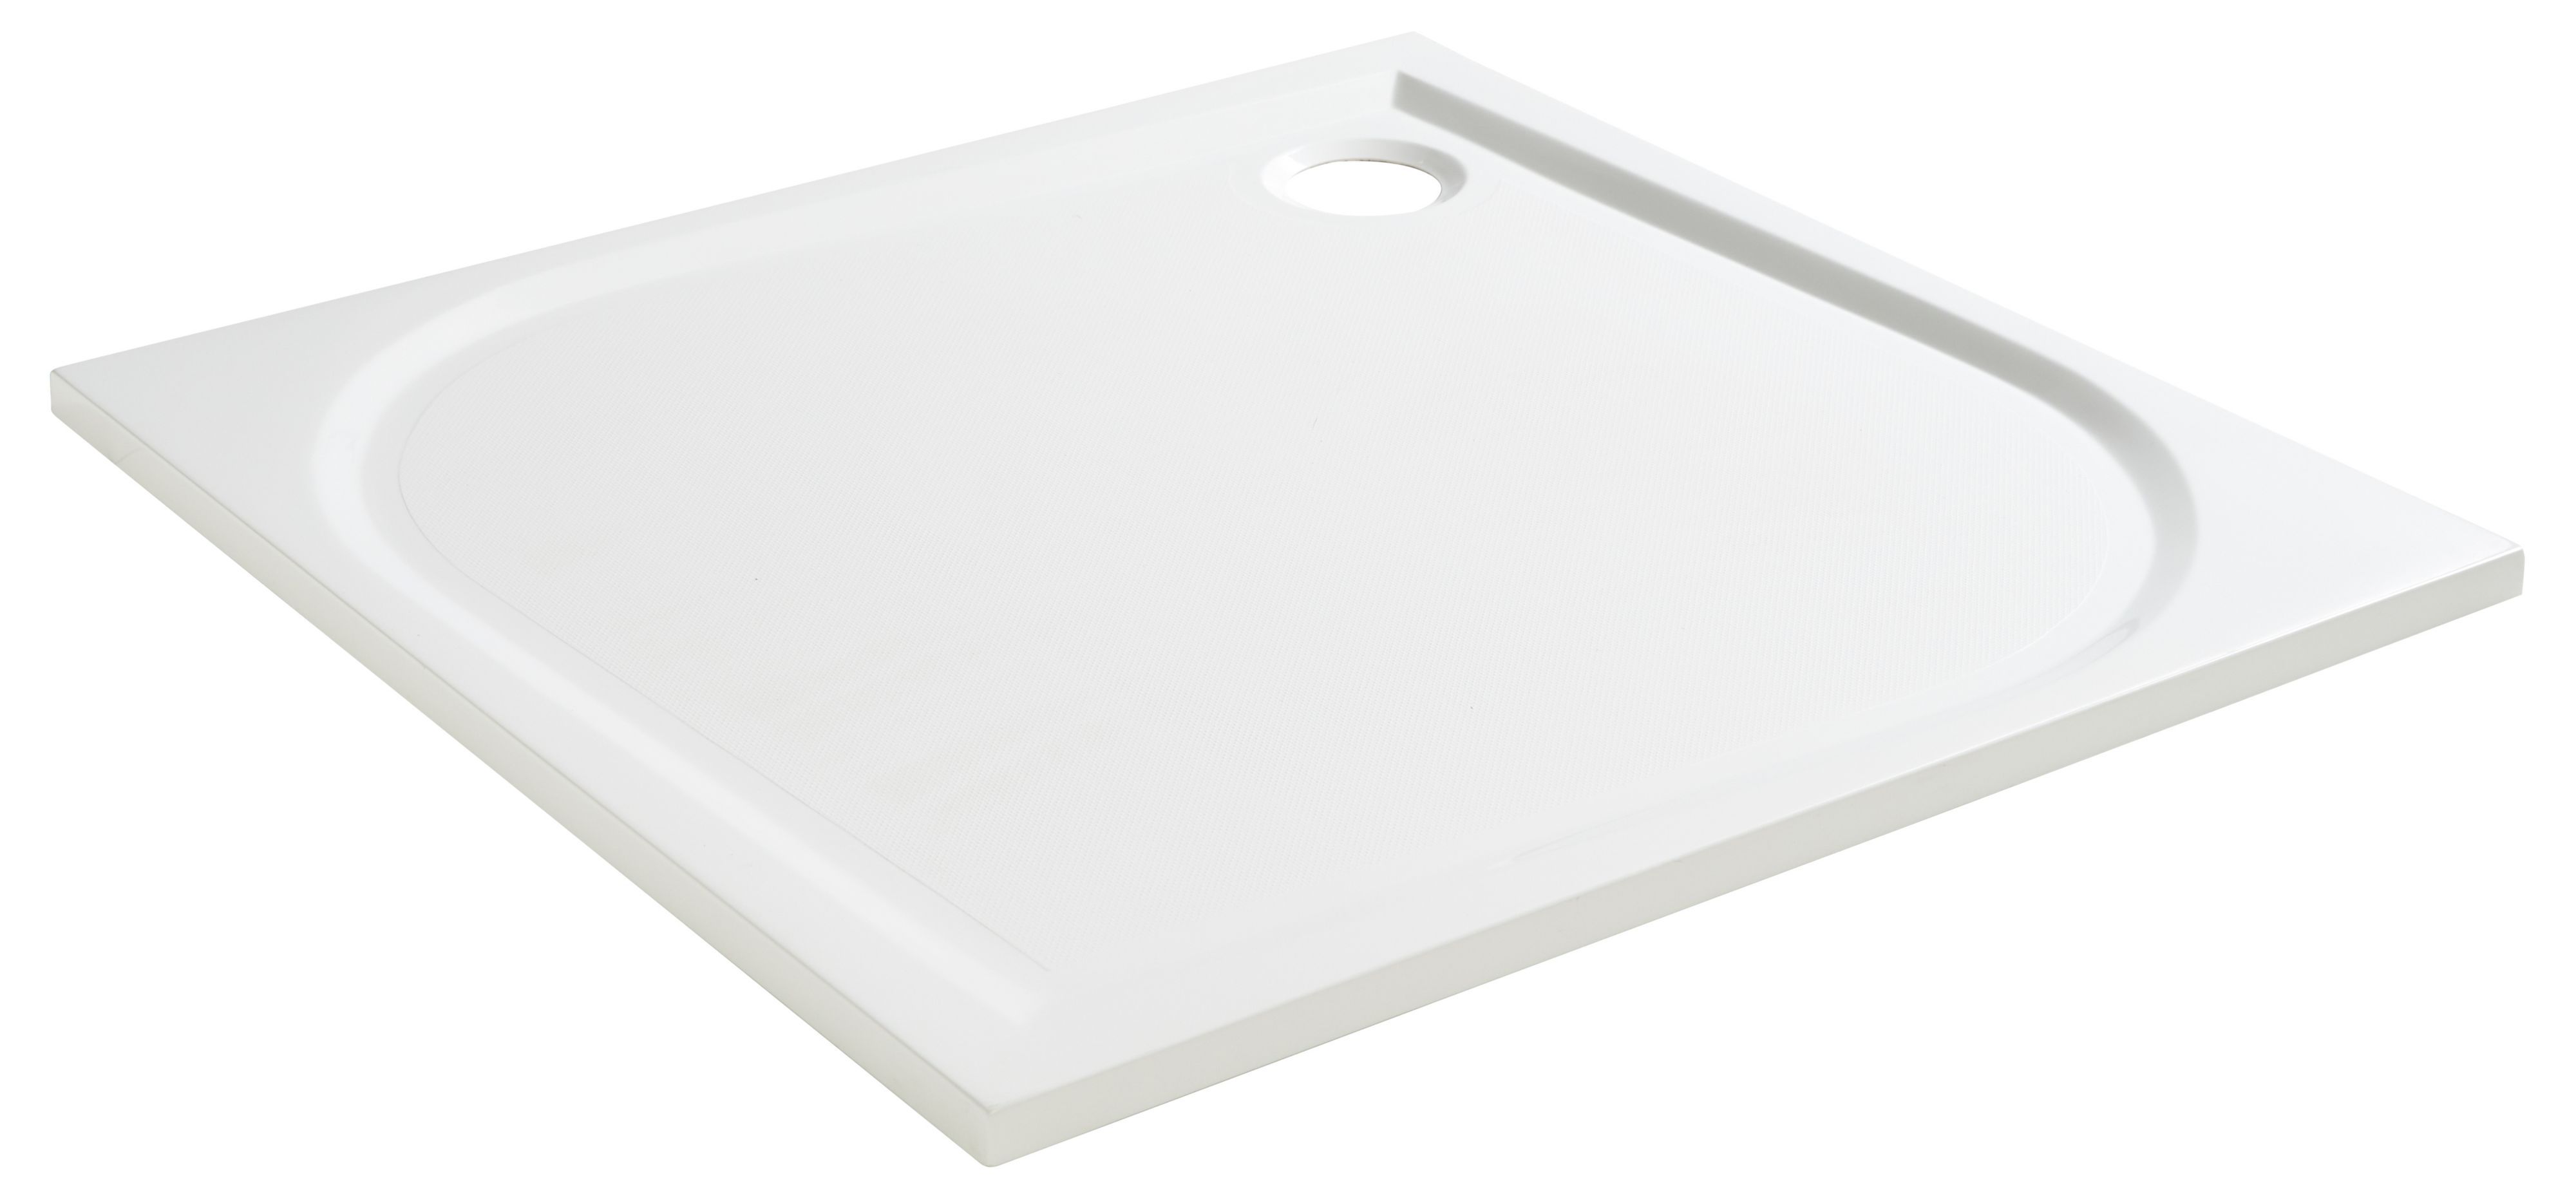 GoodHome Limski White Square Left-hand drainer Shower tray (L)900mm (W)900mm